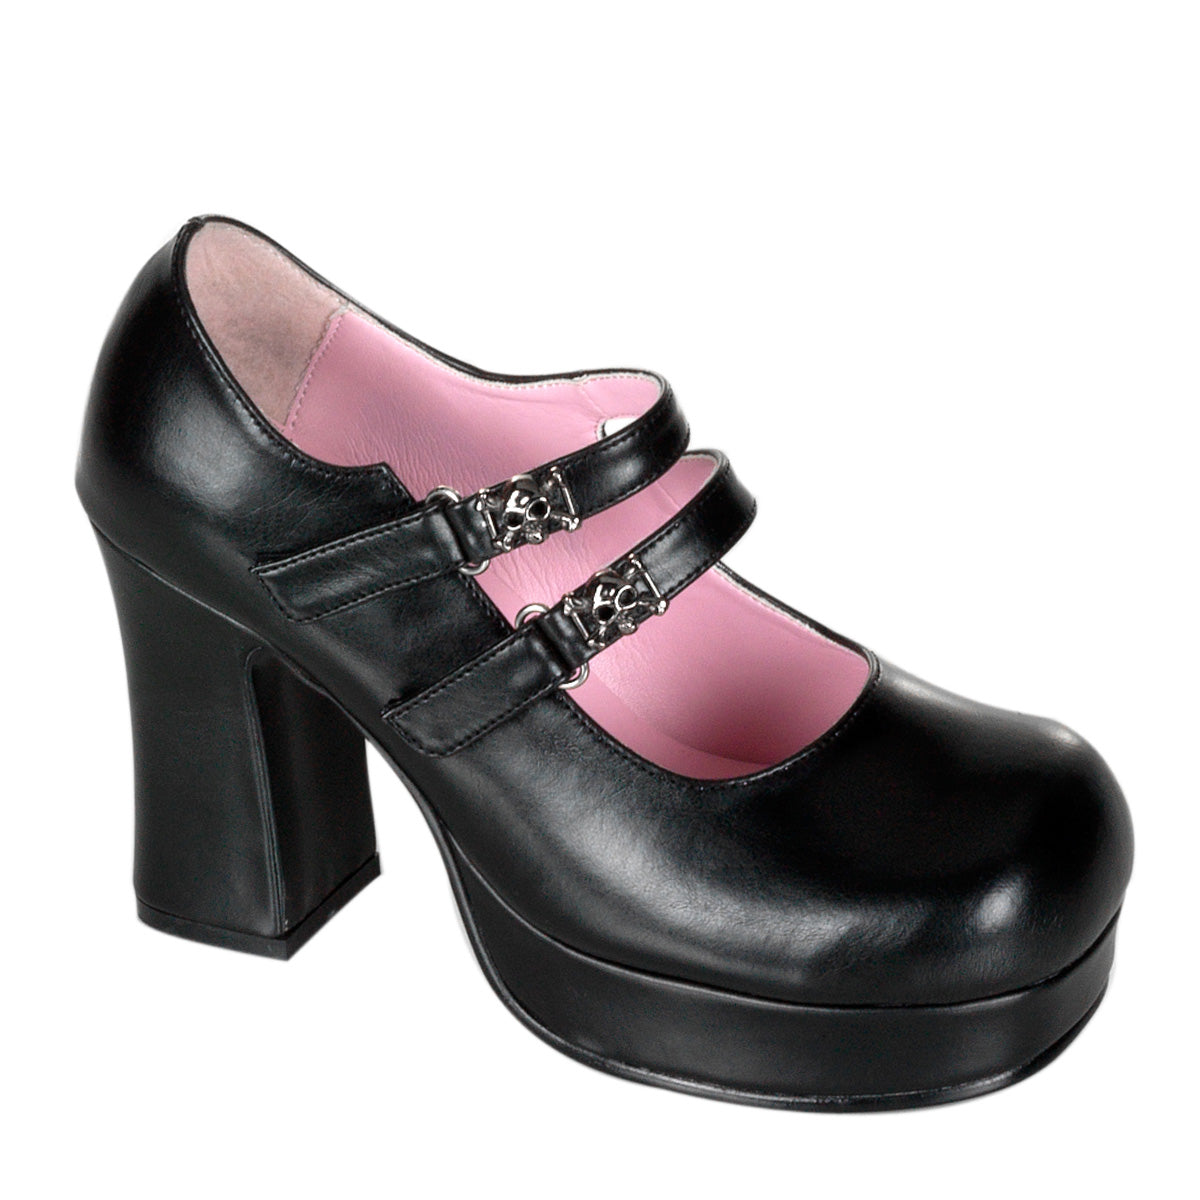 GOTHIKA-09 Alternative Footwear Demonia Women's Heels & Platform Shoes Blk Vegan Leather